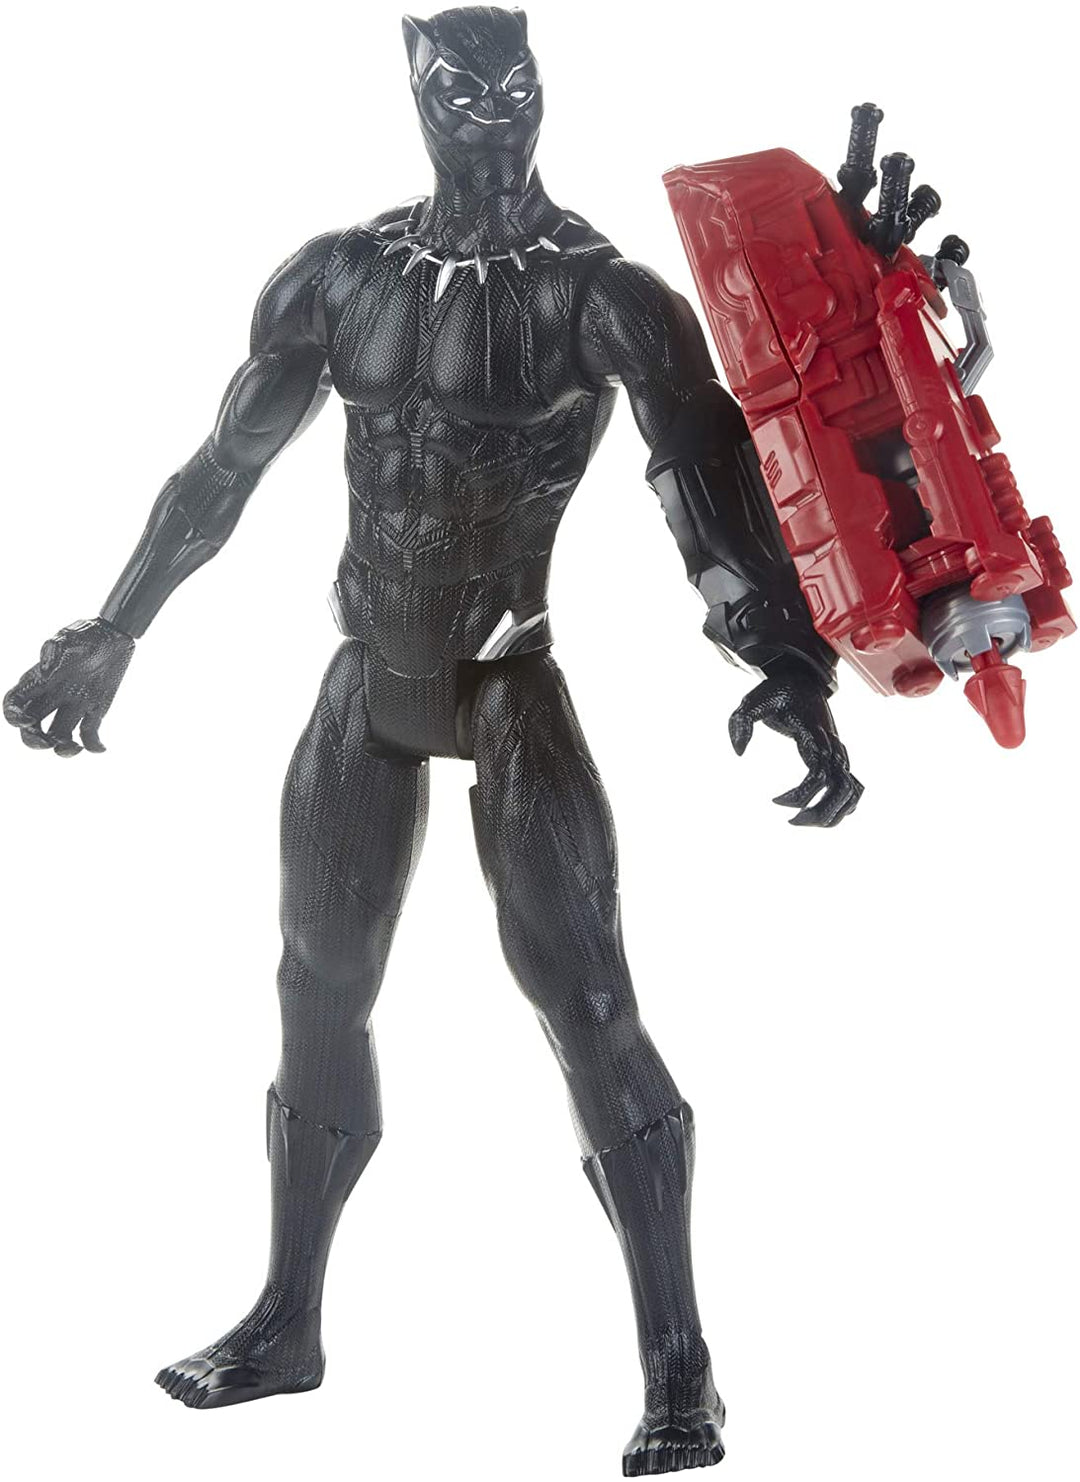 Marvel Avengers Infinity War Titan Hero Series Black Panther Superhelden-Actionfigur im 30-cm-Maßstab mit Titan Hero Power FX-Anschluss